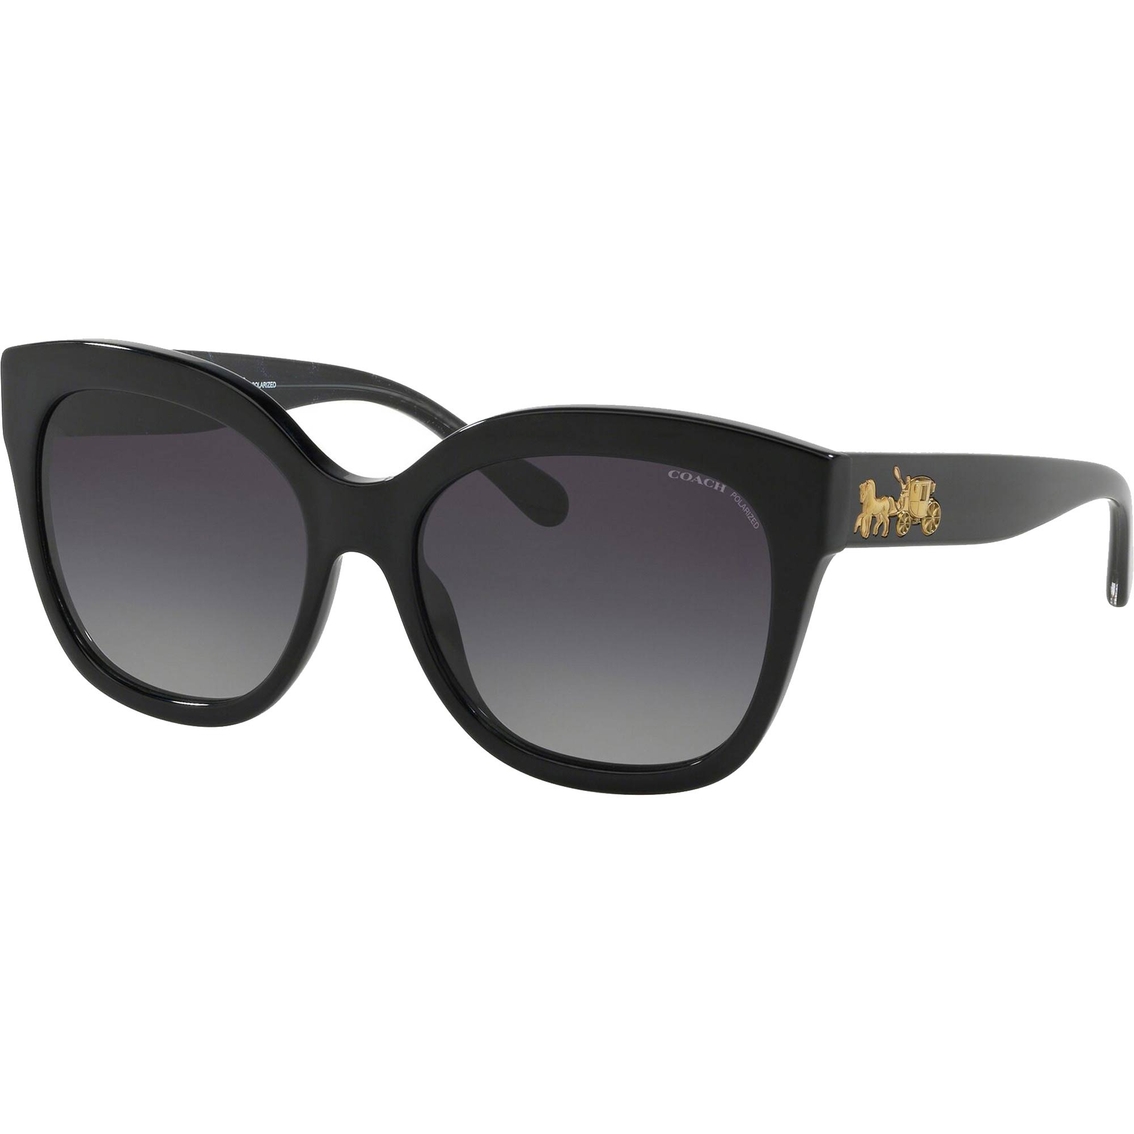 Coach Square Sunglasses 0hc8264 | Women's Sunglasses | Clothing ...